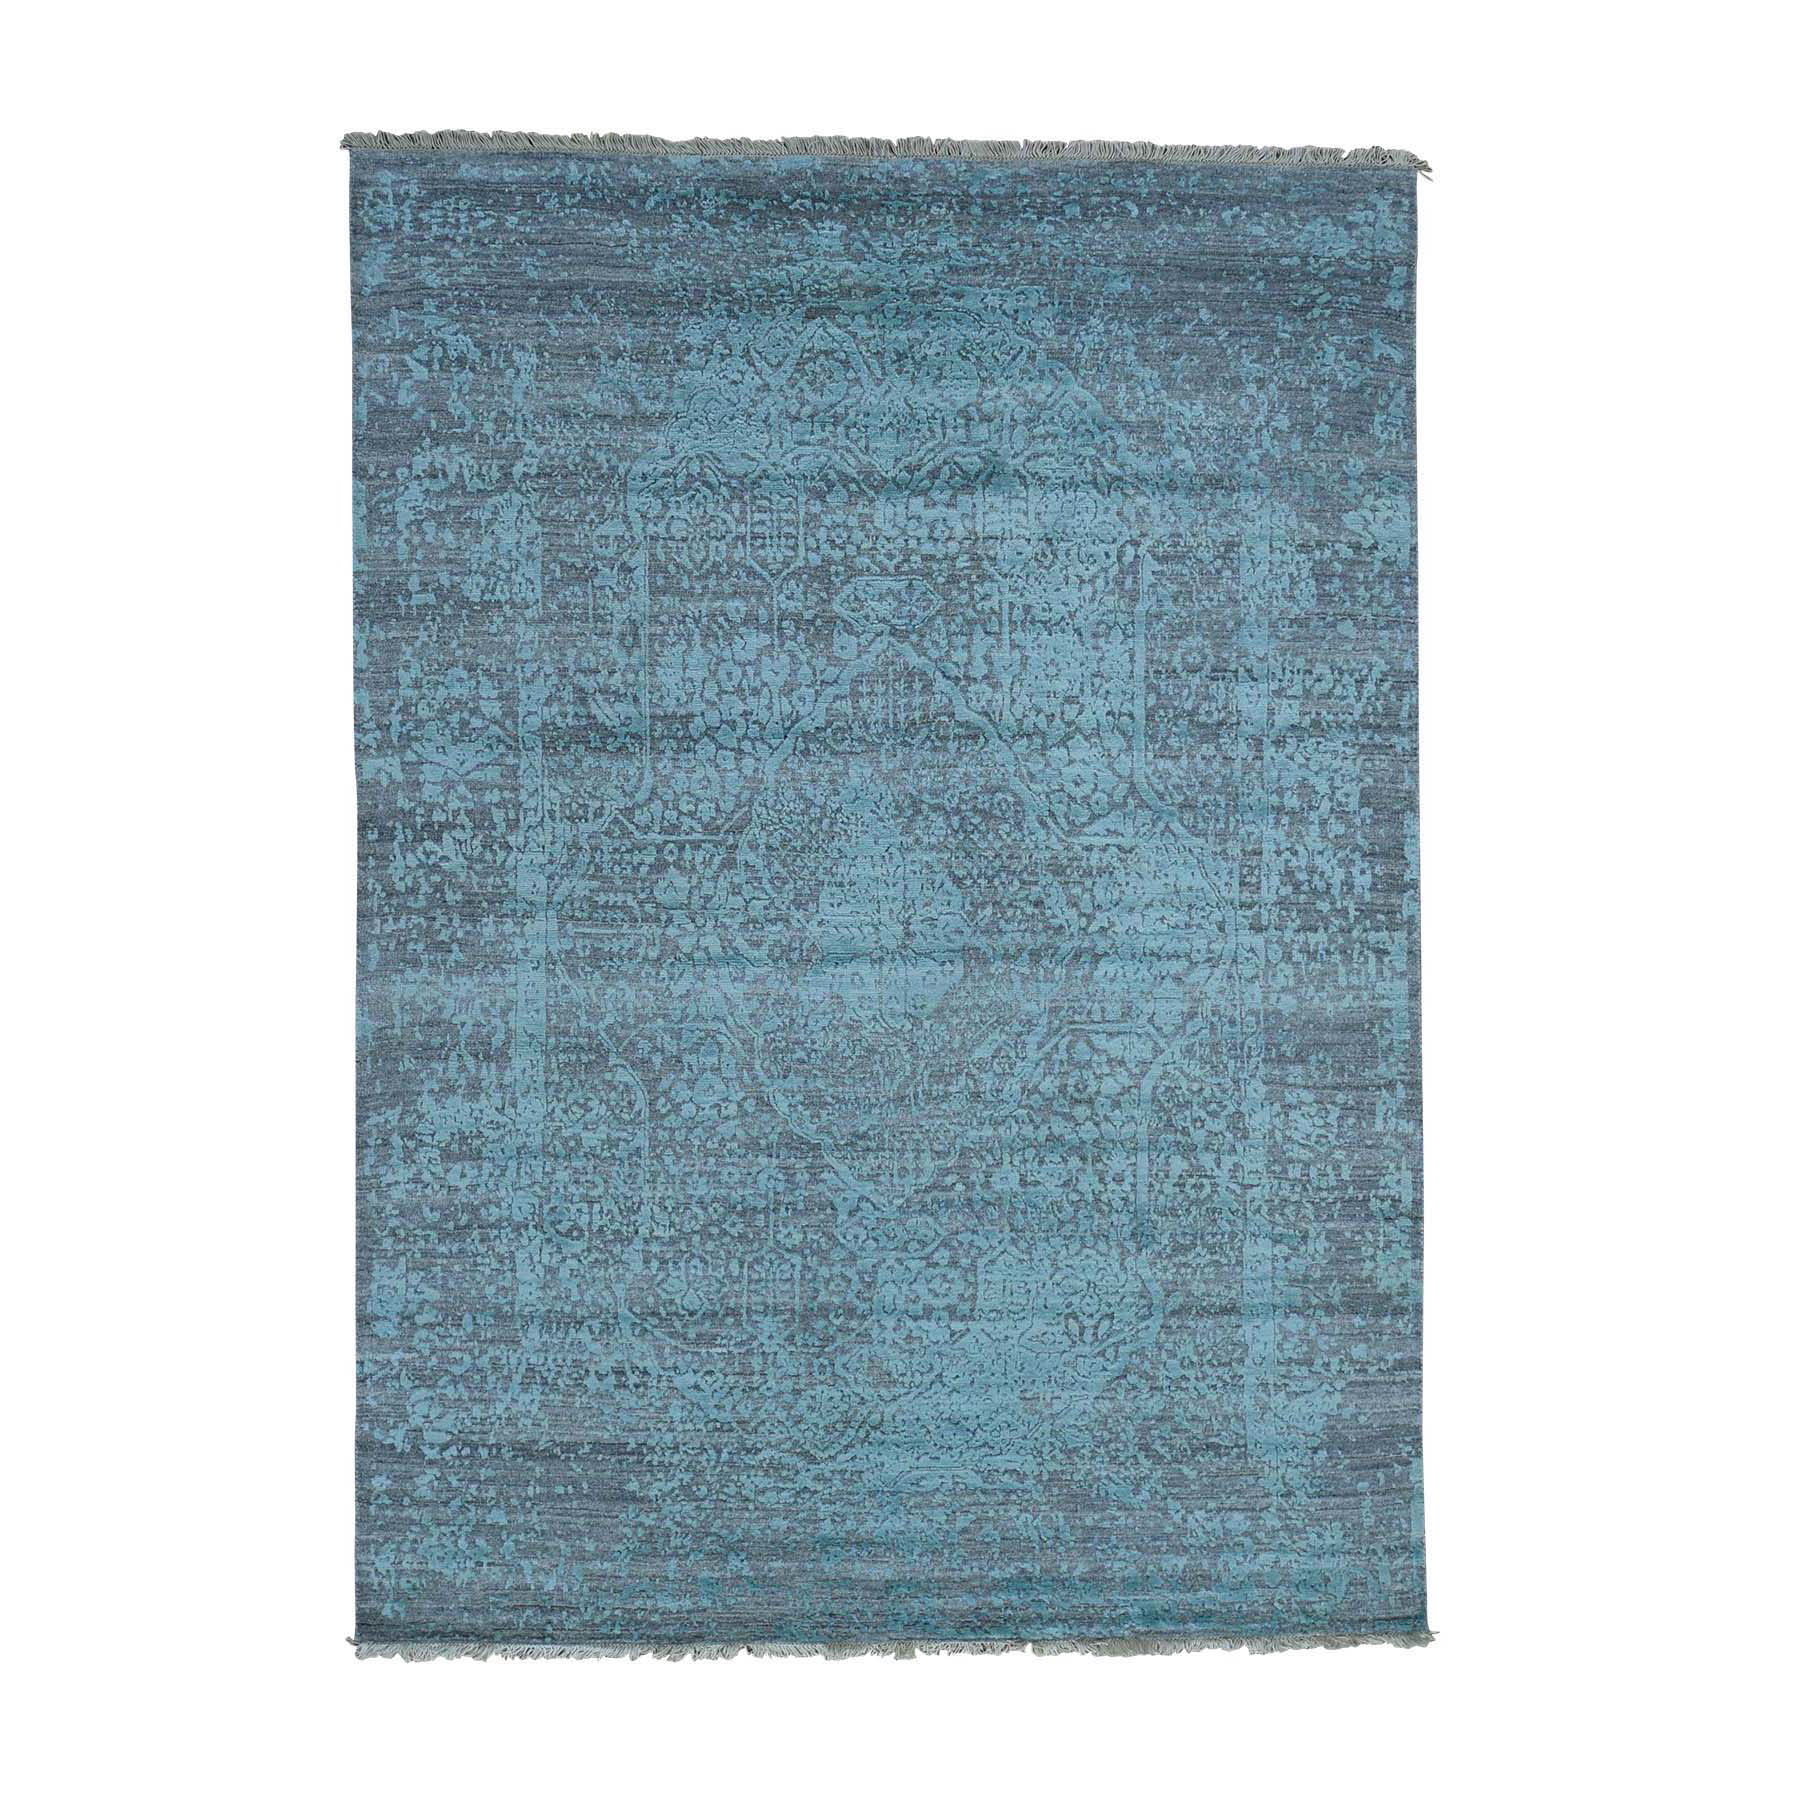 5'x6'10" Seafoam Green Hand Woven Wool and Silk Broken Persian Design Oriental Rug 